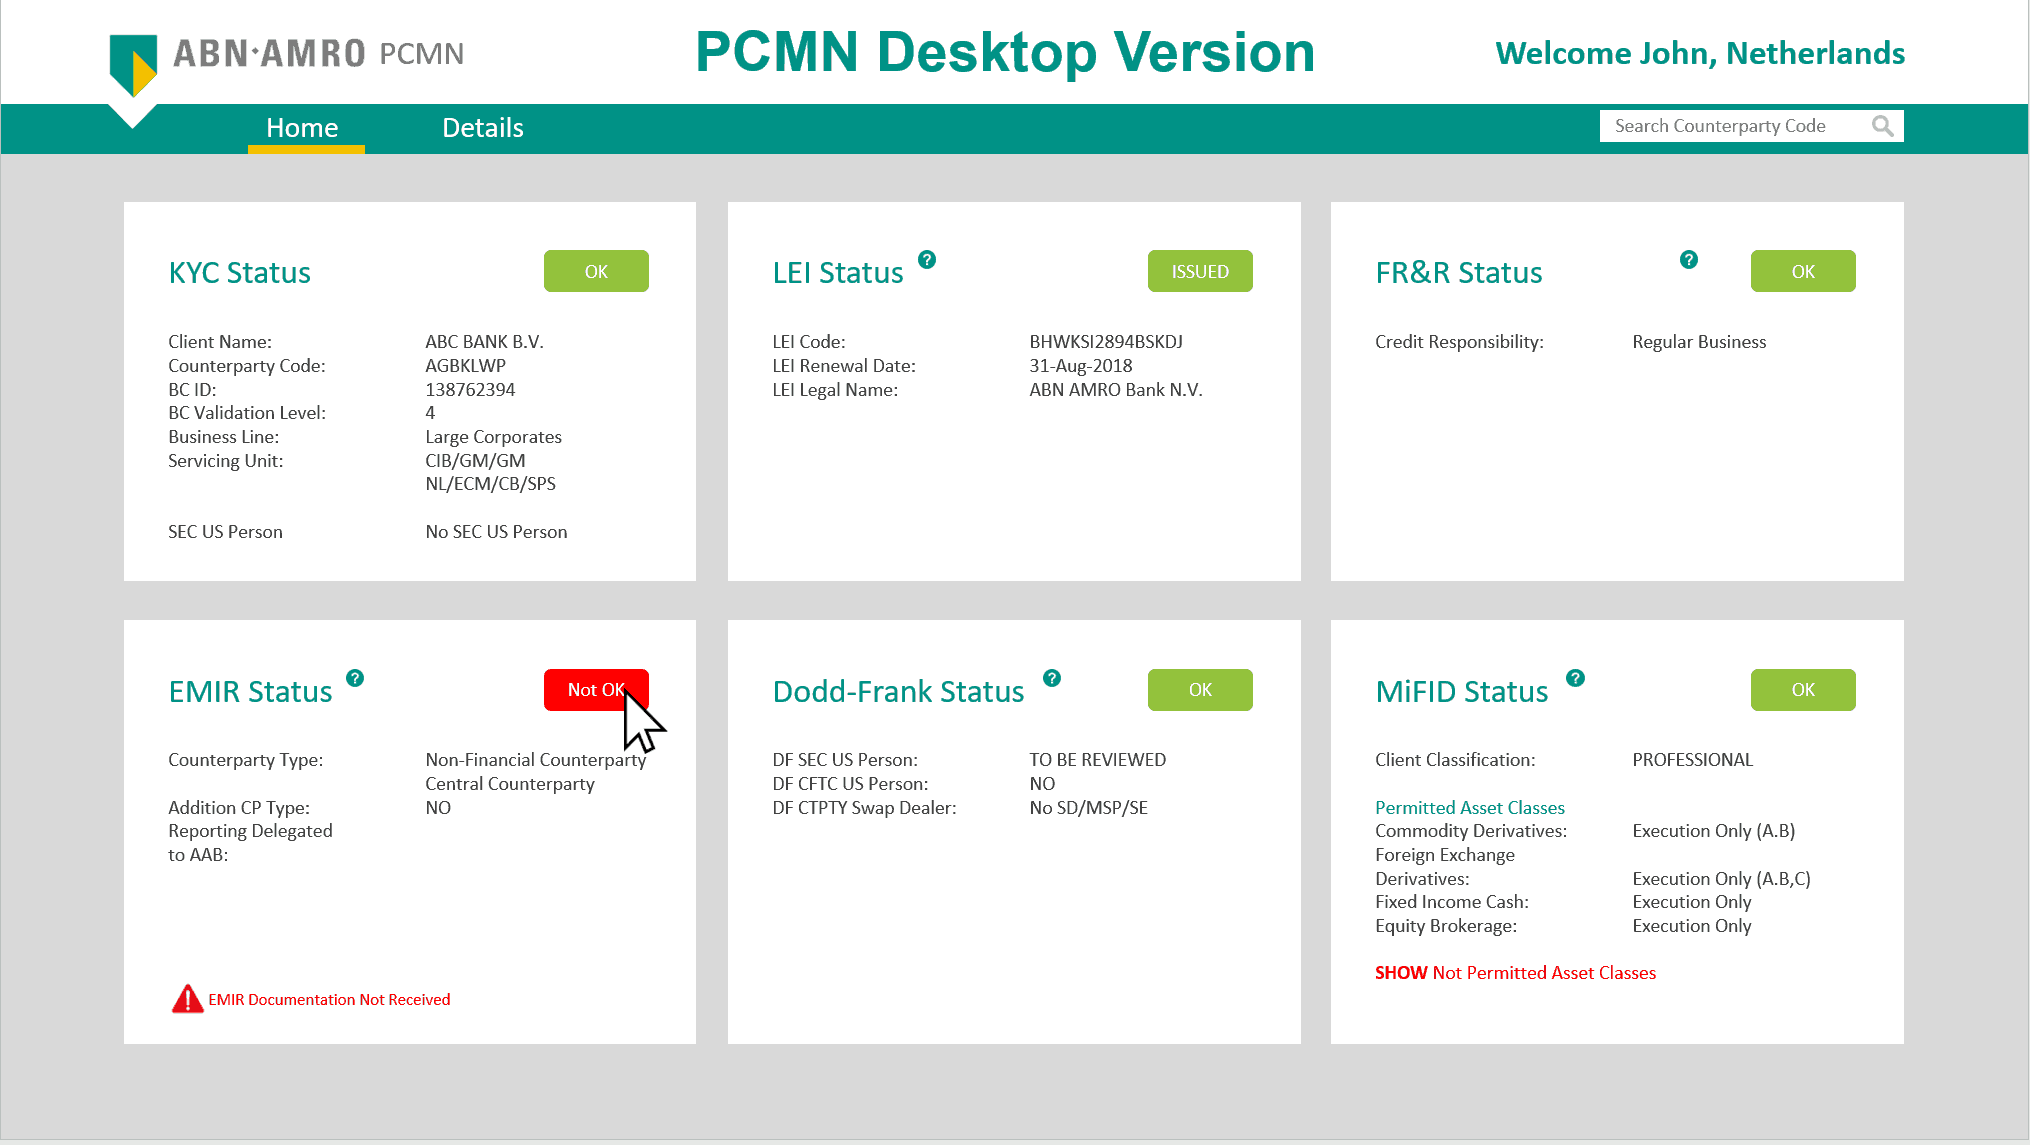 ABN AMRO PCMN Desktop